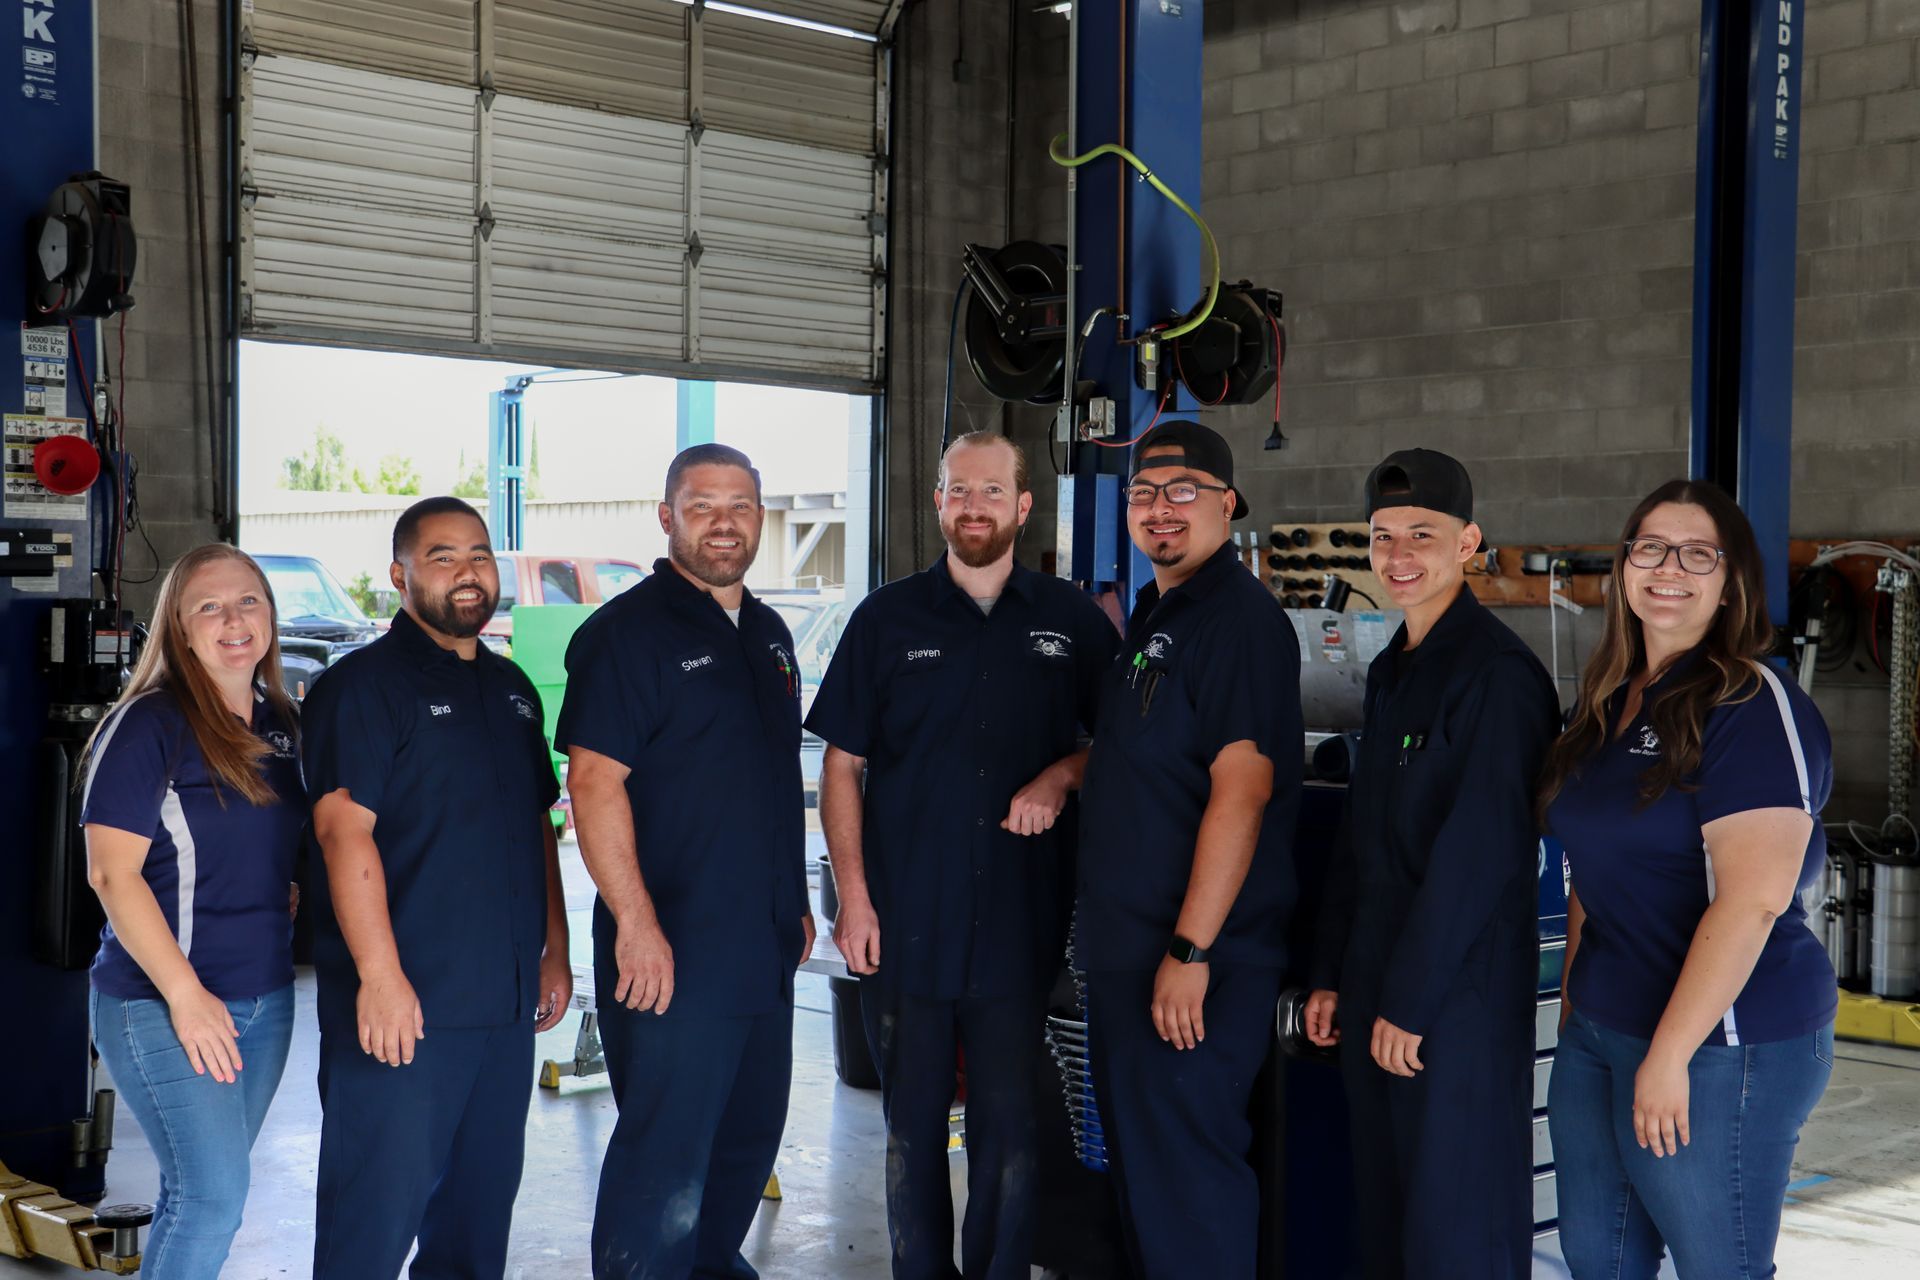 Group photograph of the Bowman's Auto Repair team